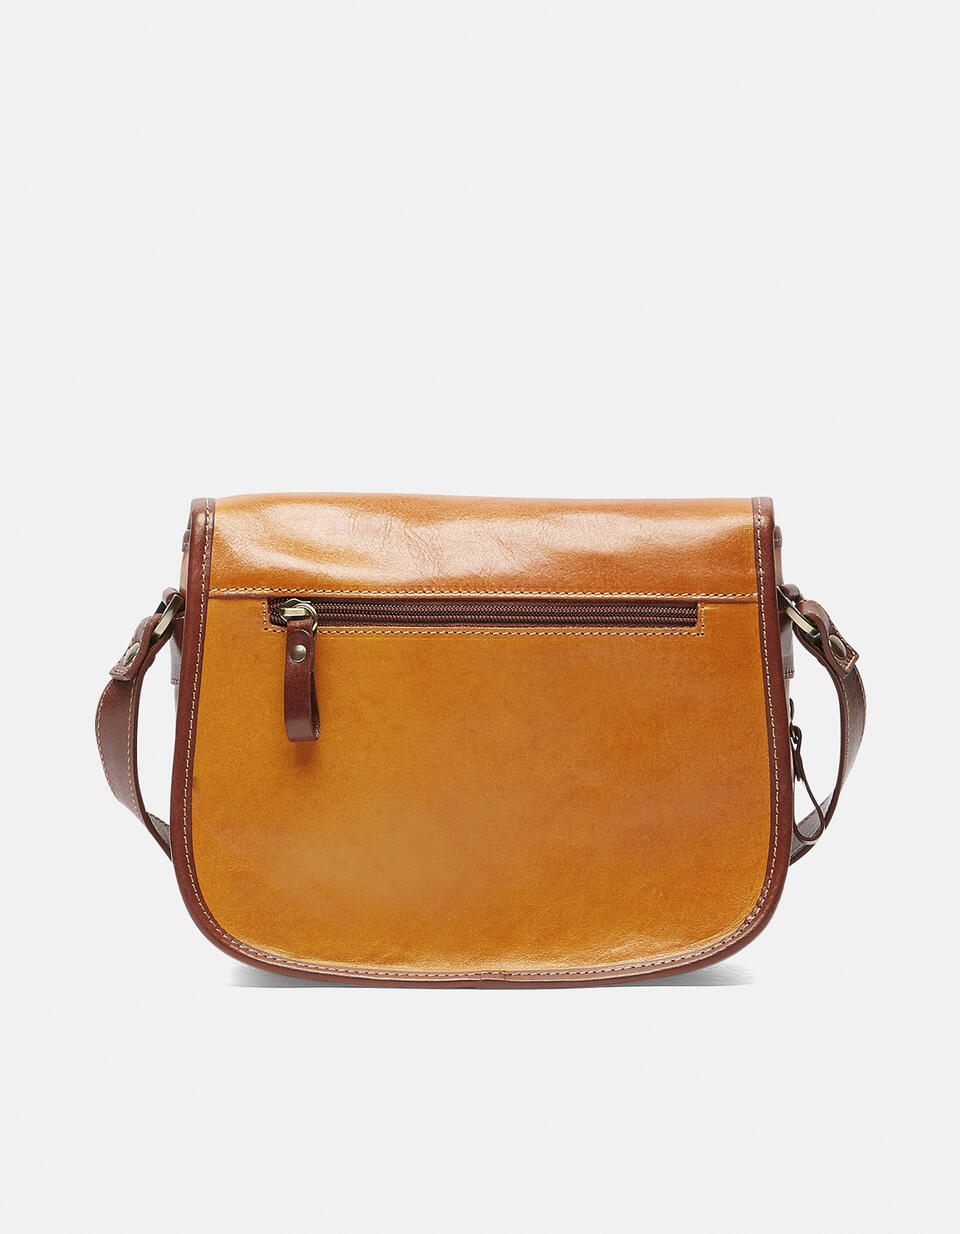 Leather Messenger bag - Messenger Bags - WOMEN'S BAGS | bags GIALLOBICOLORE - Messenger Bags - WOMEN'S BAGS | bagsCuoieria Fiorentina